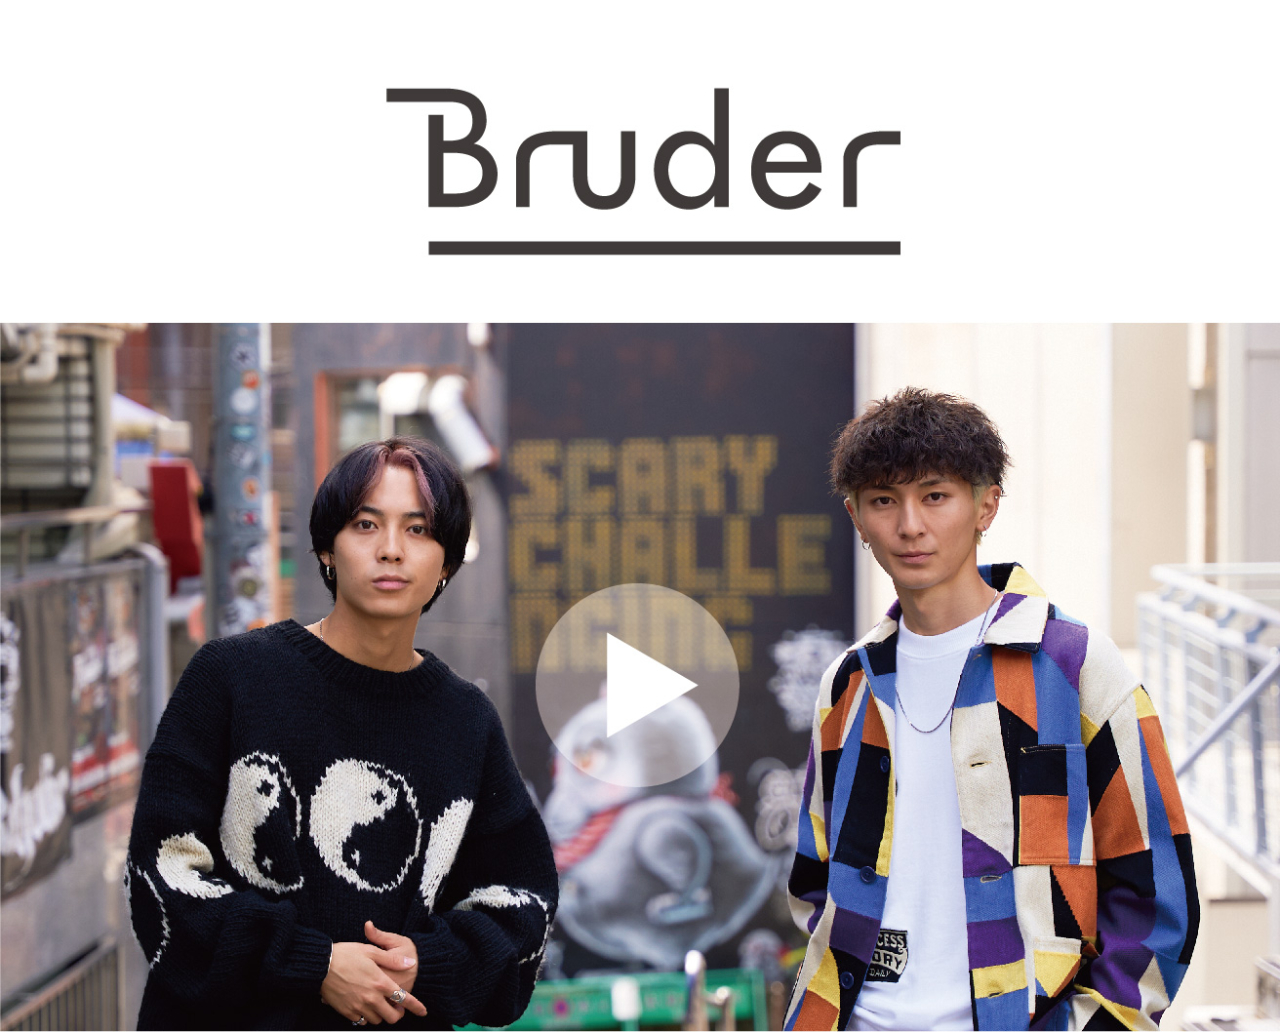 _bruder-1